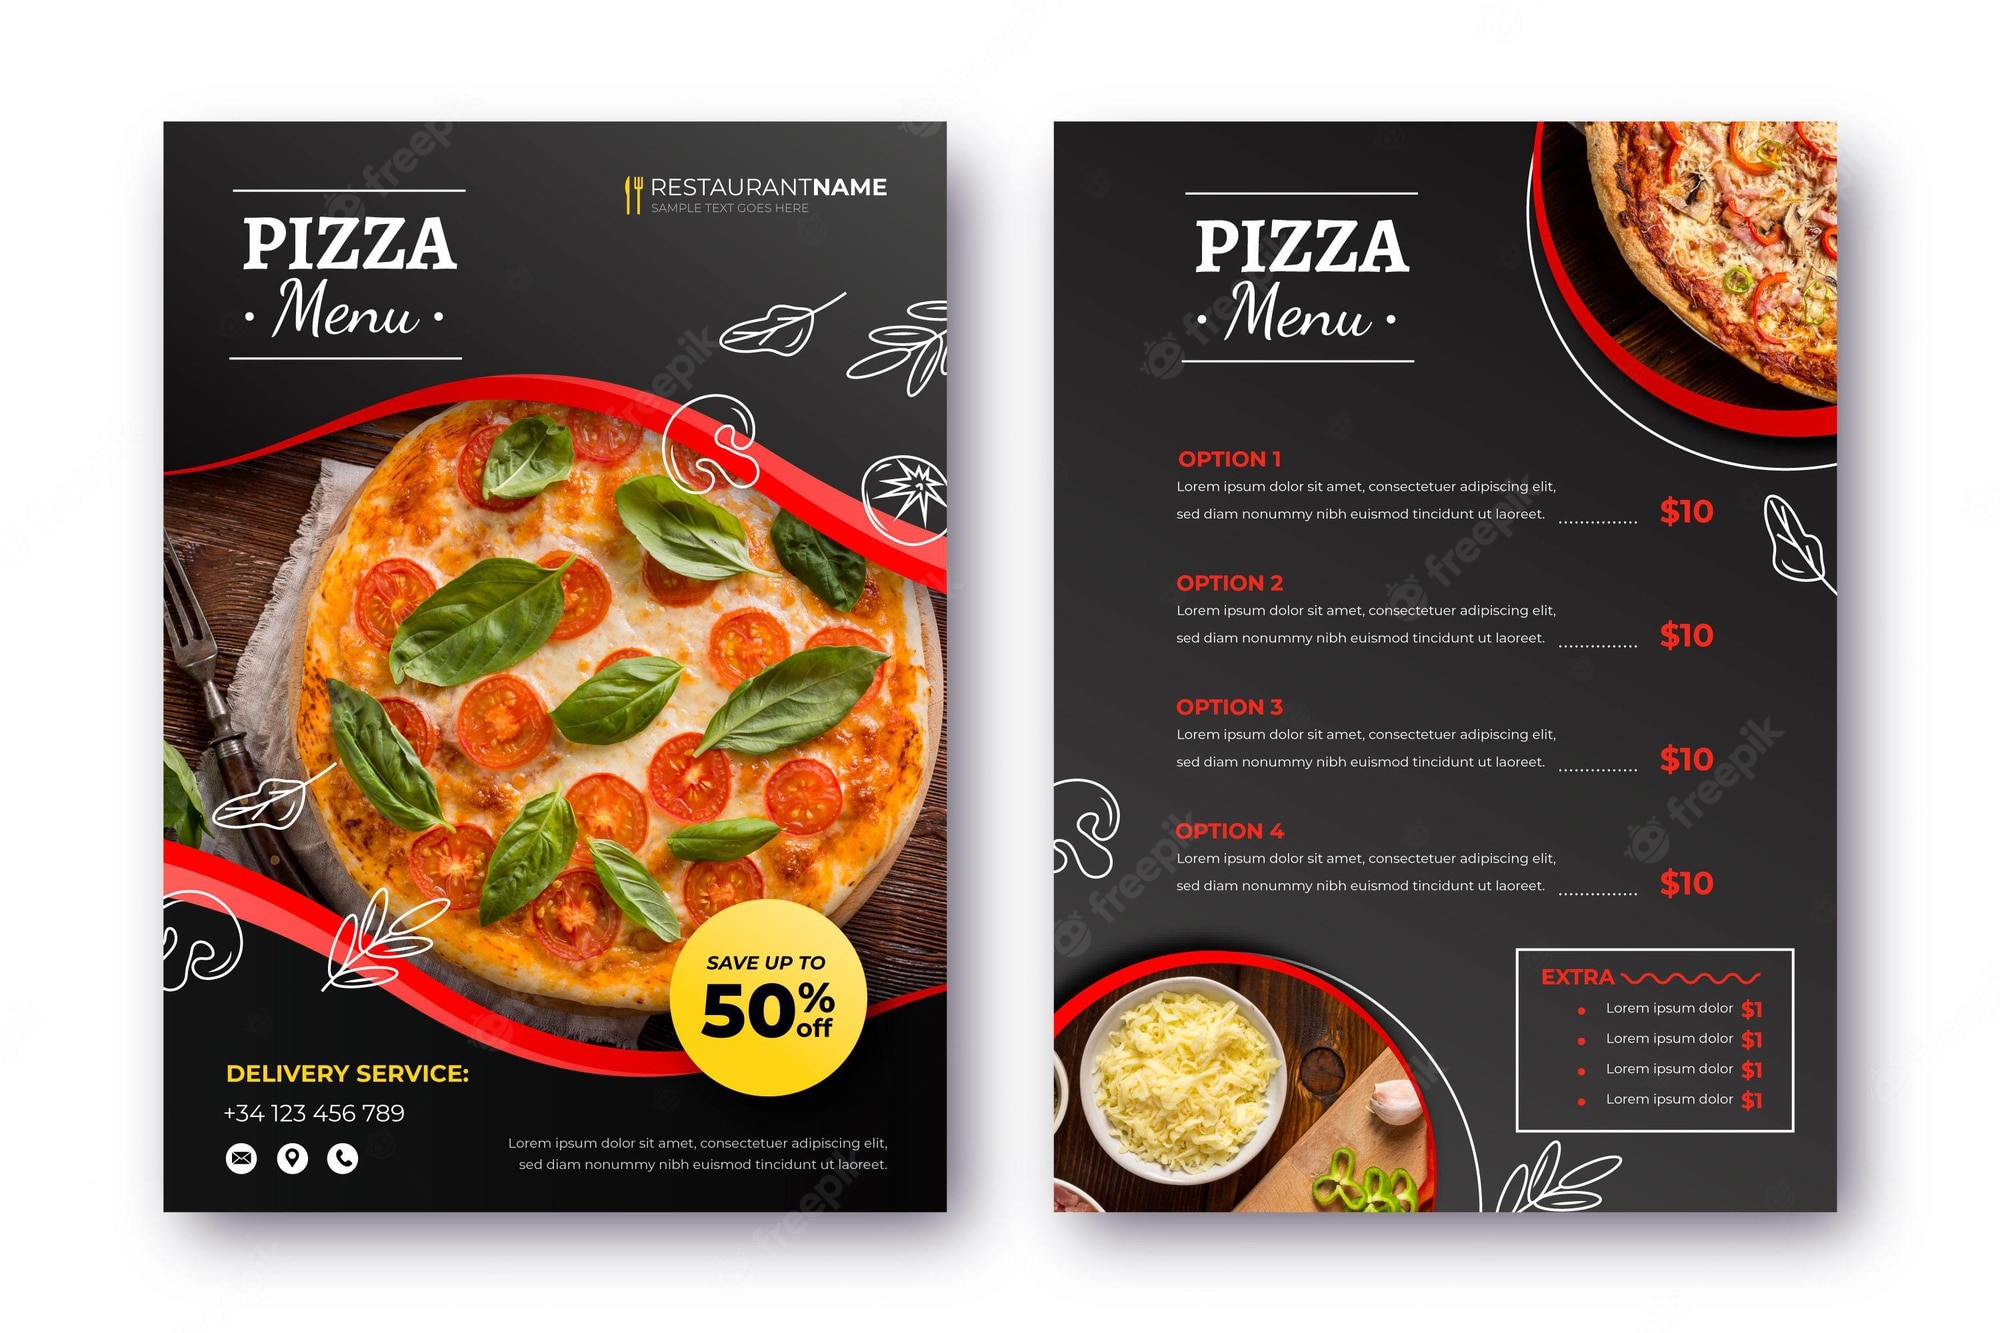 Free Vector | Pizza restaurant menu with photo - cardapio pizza